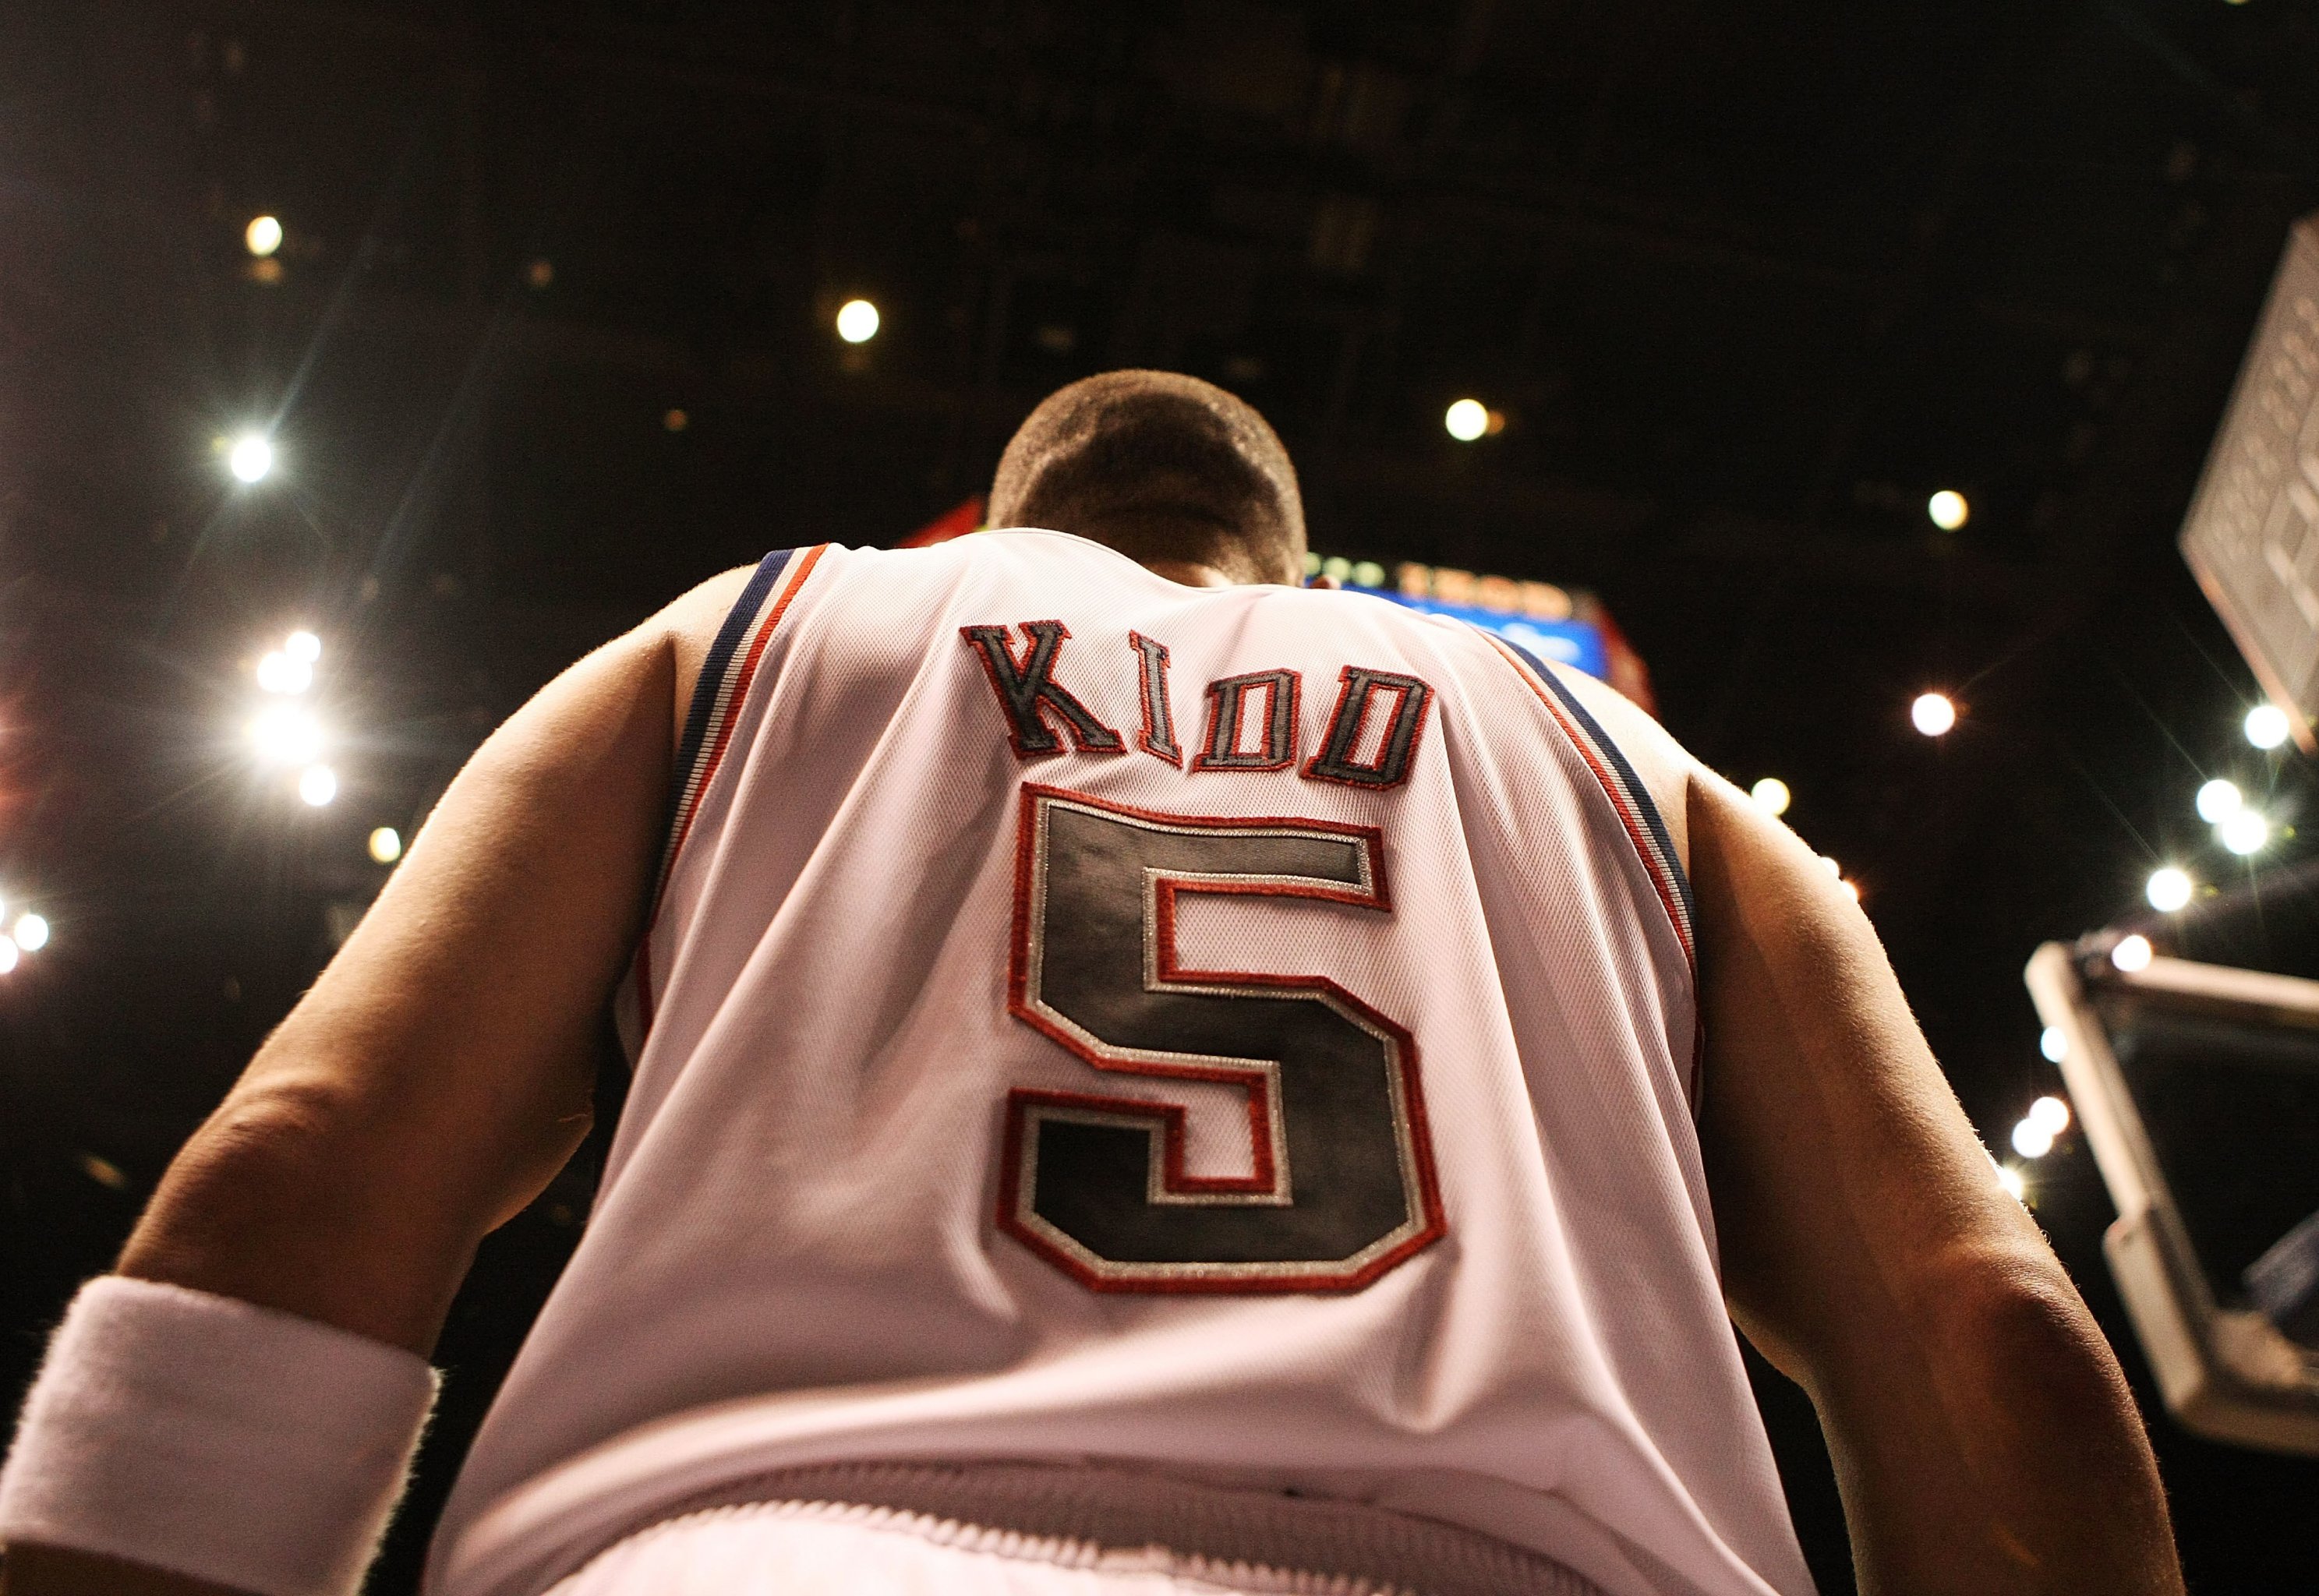 Brooklyn Nets – Brooklyn Nets Name Jason Kidd Head Coach